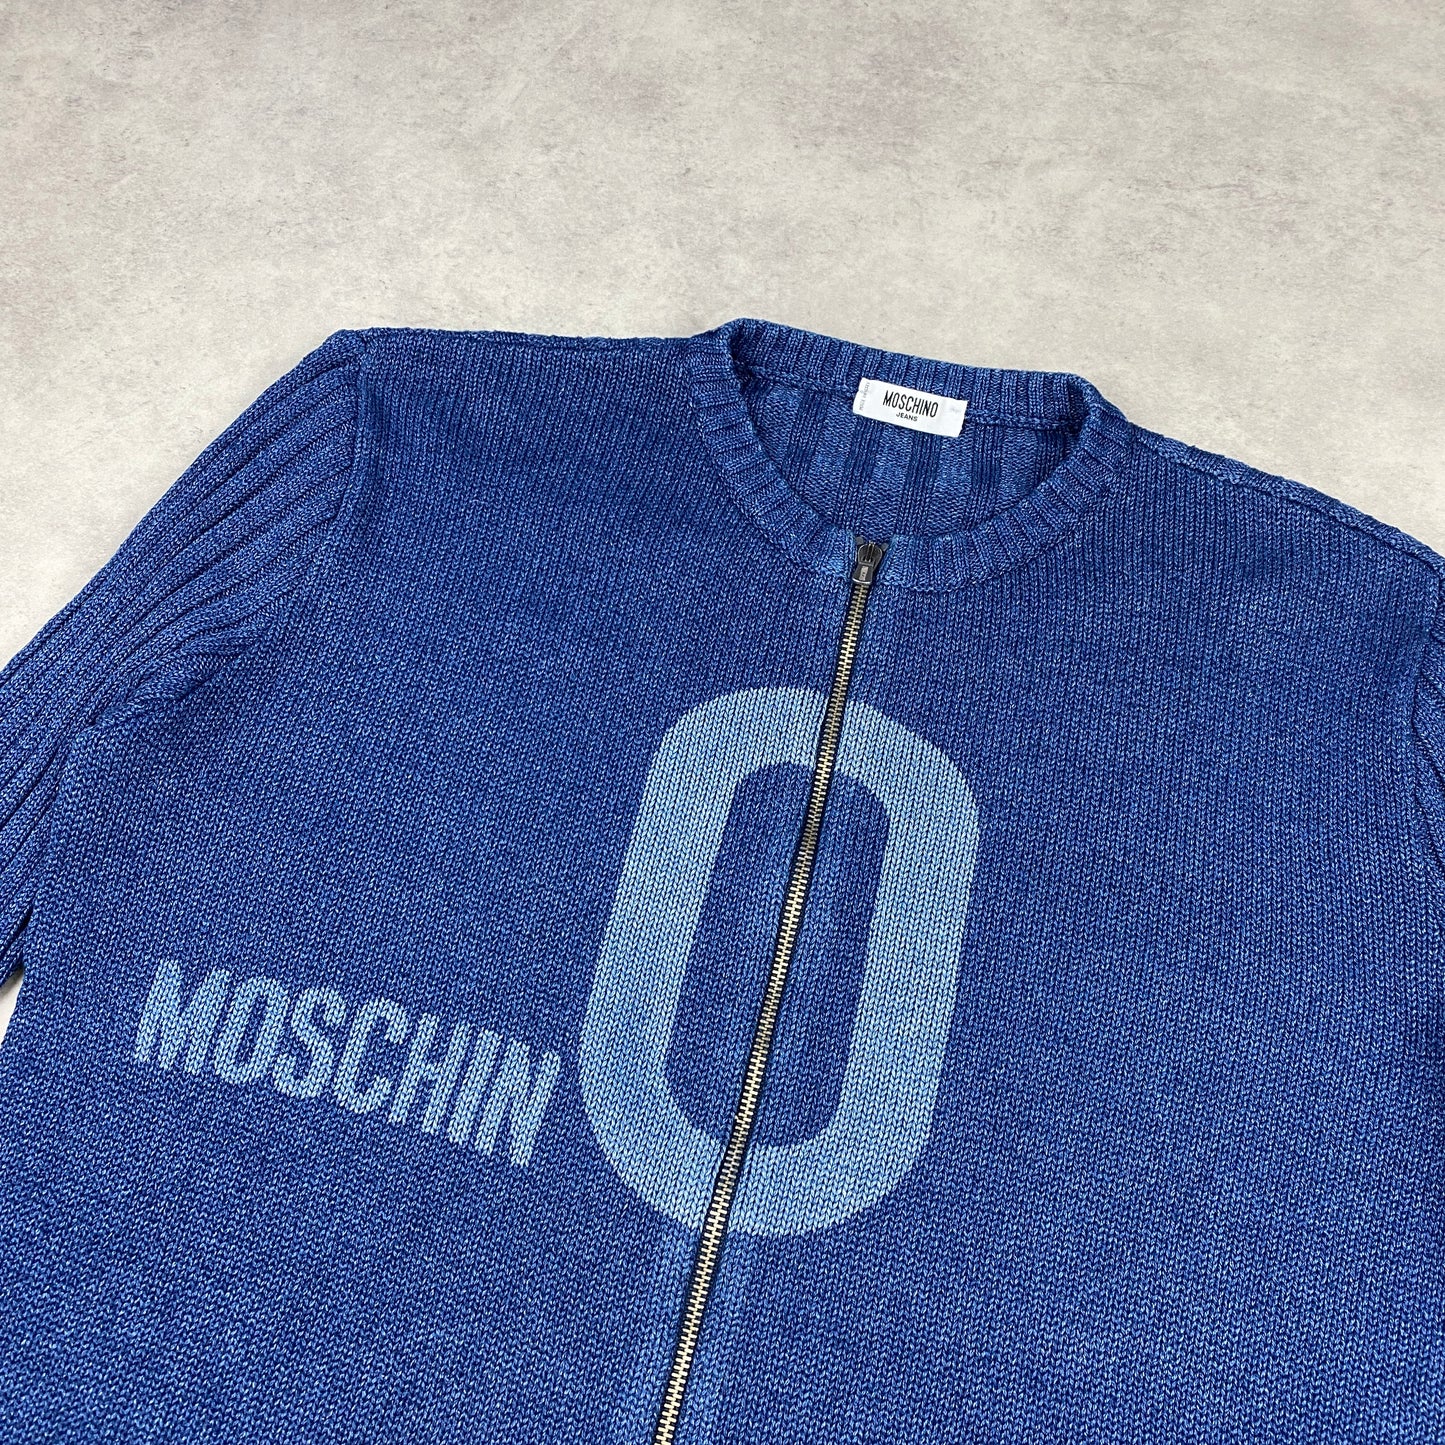 Moschino RARE knit zip sweater (M-L)